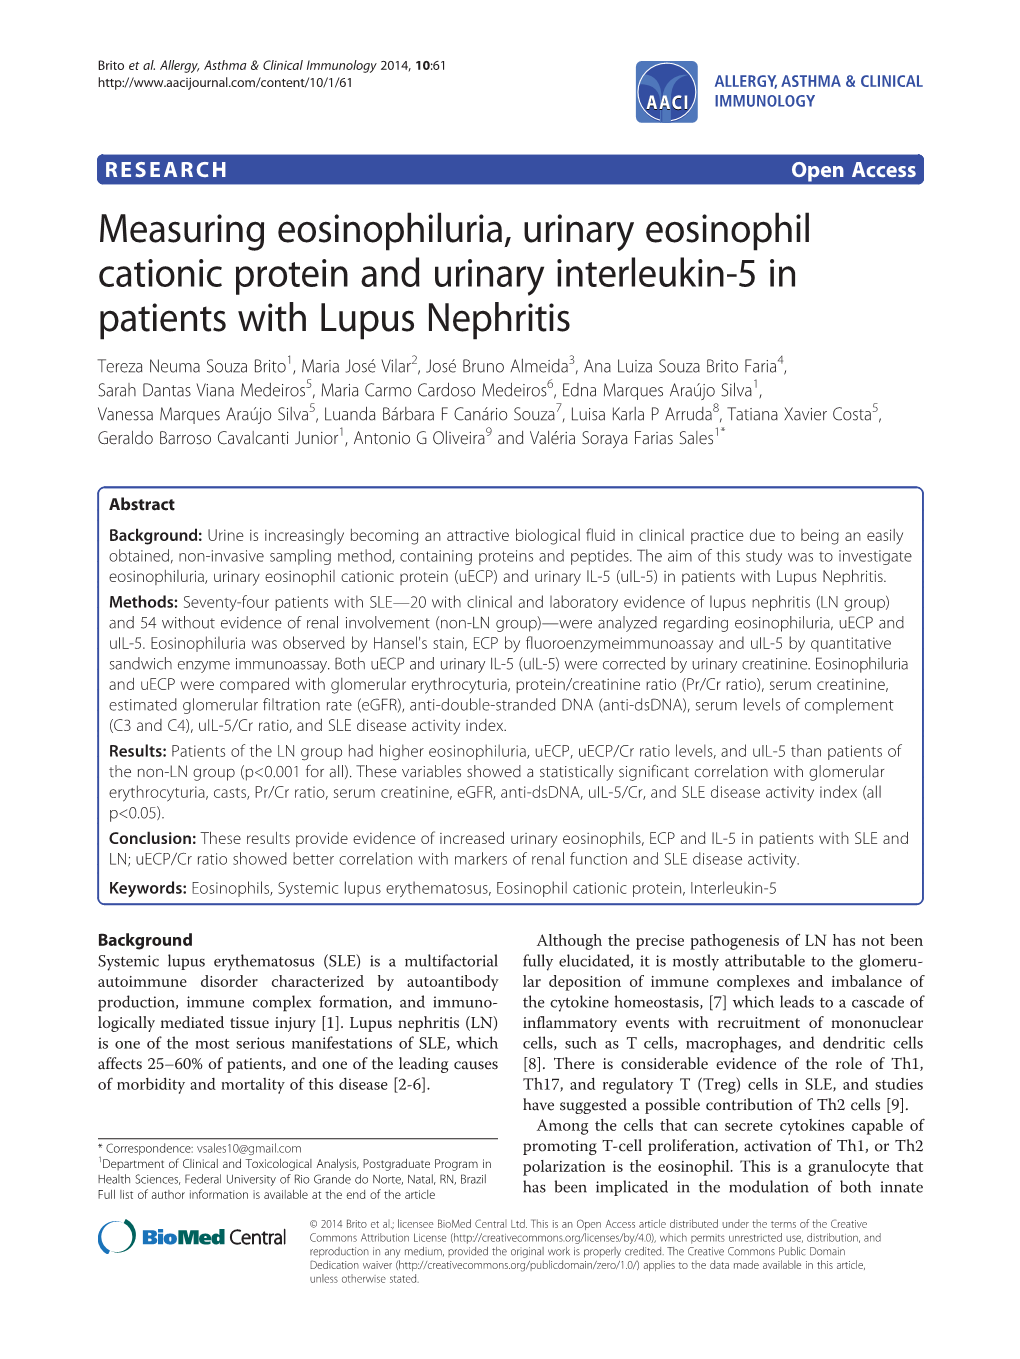 Measuring Eosinophiluria, Urinary Eosinophil Cationic Protein And